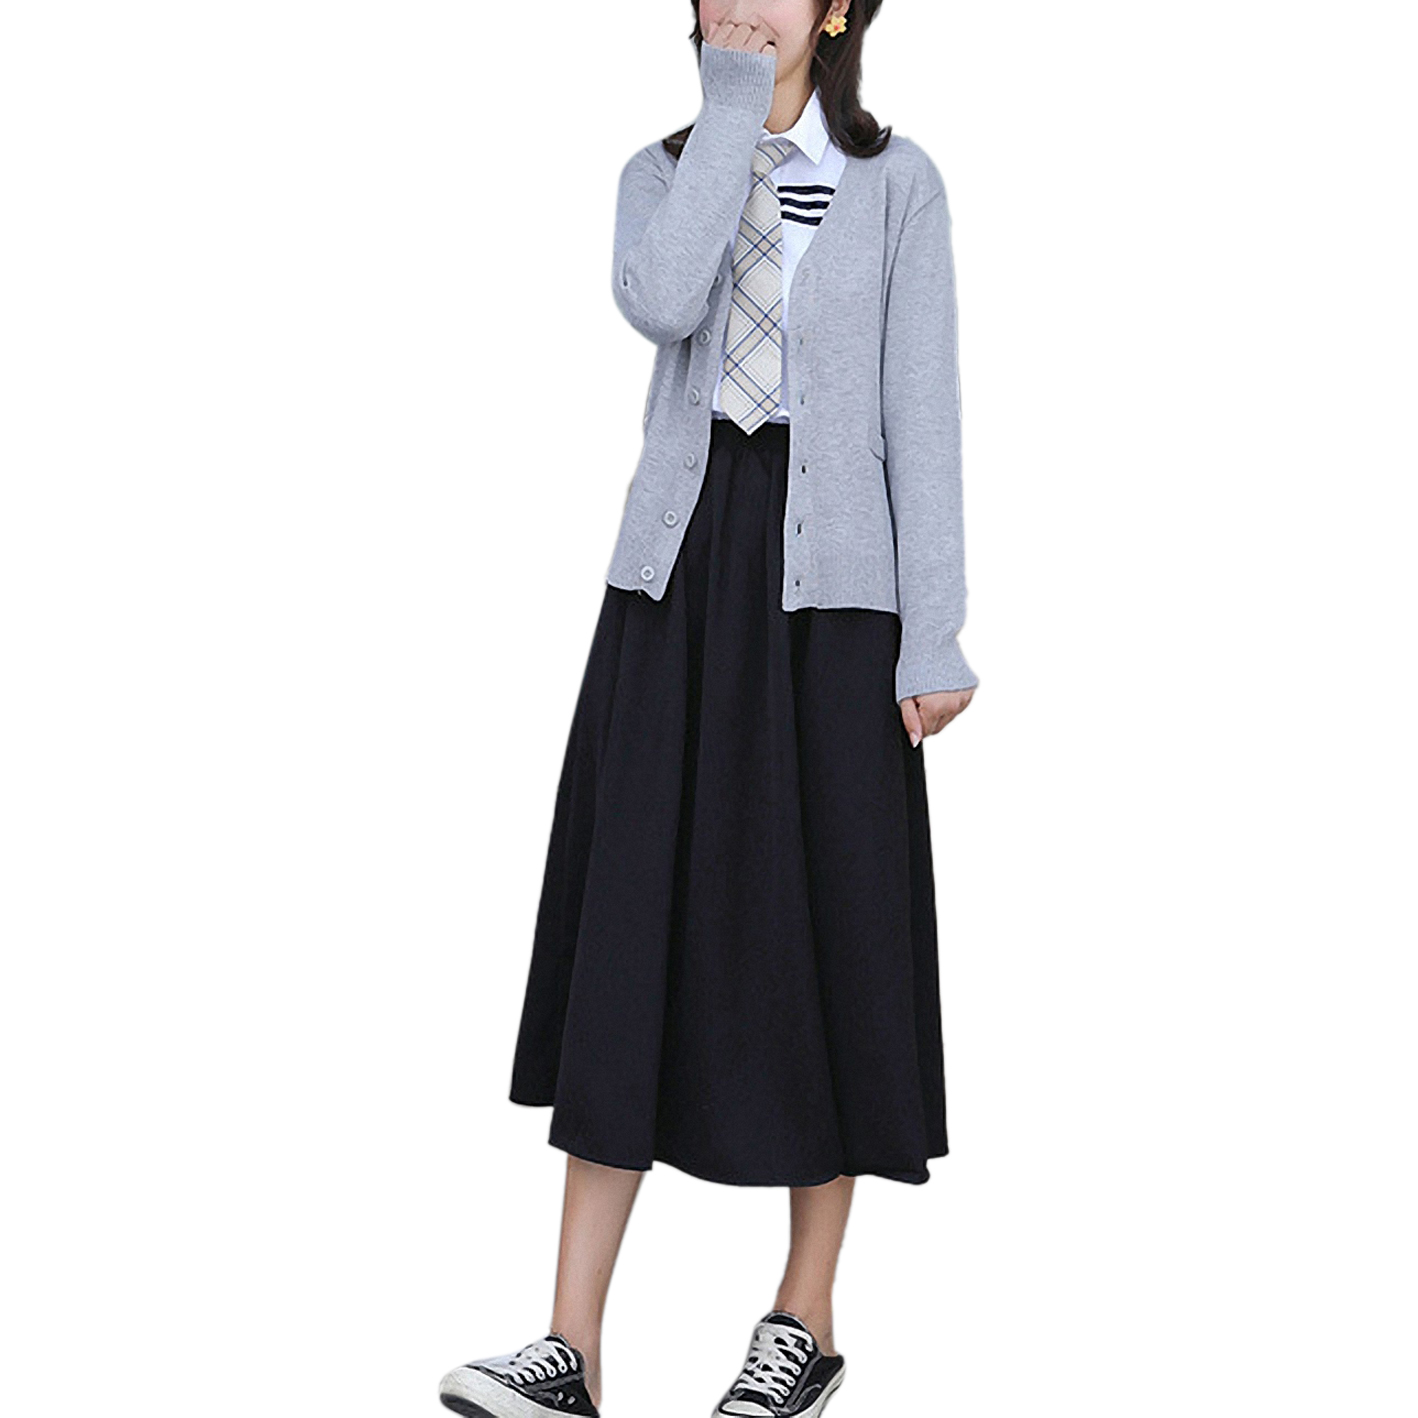 Grey cardigan   three bars white shirt long sleeve   black skirt   khaki tie